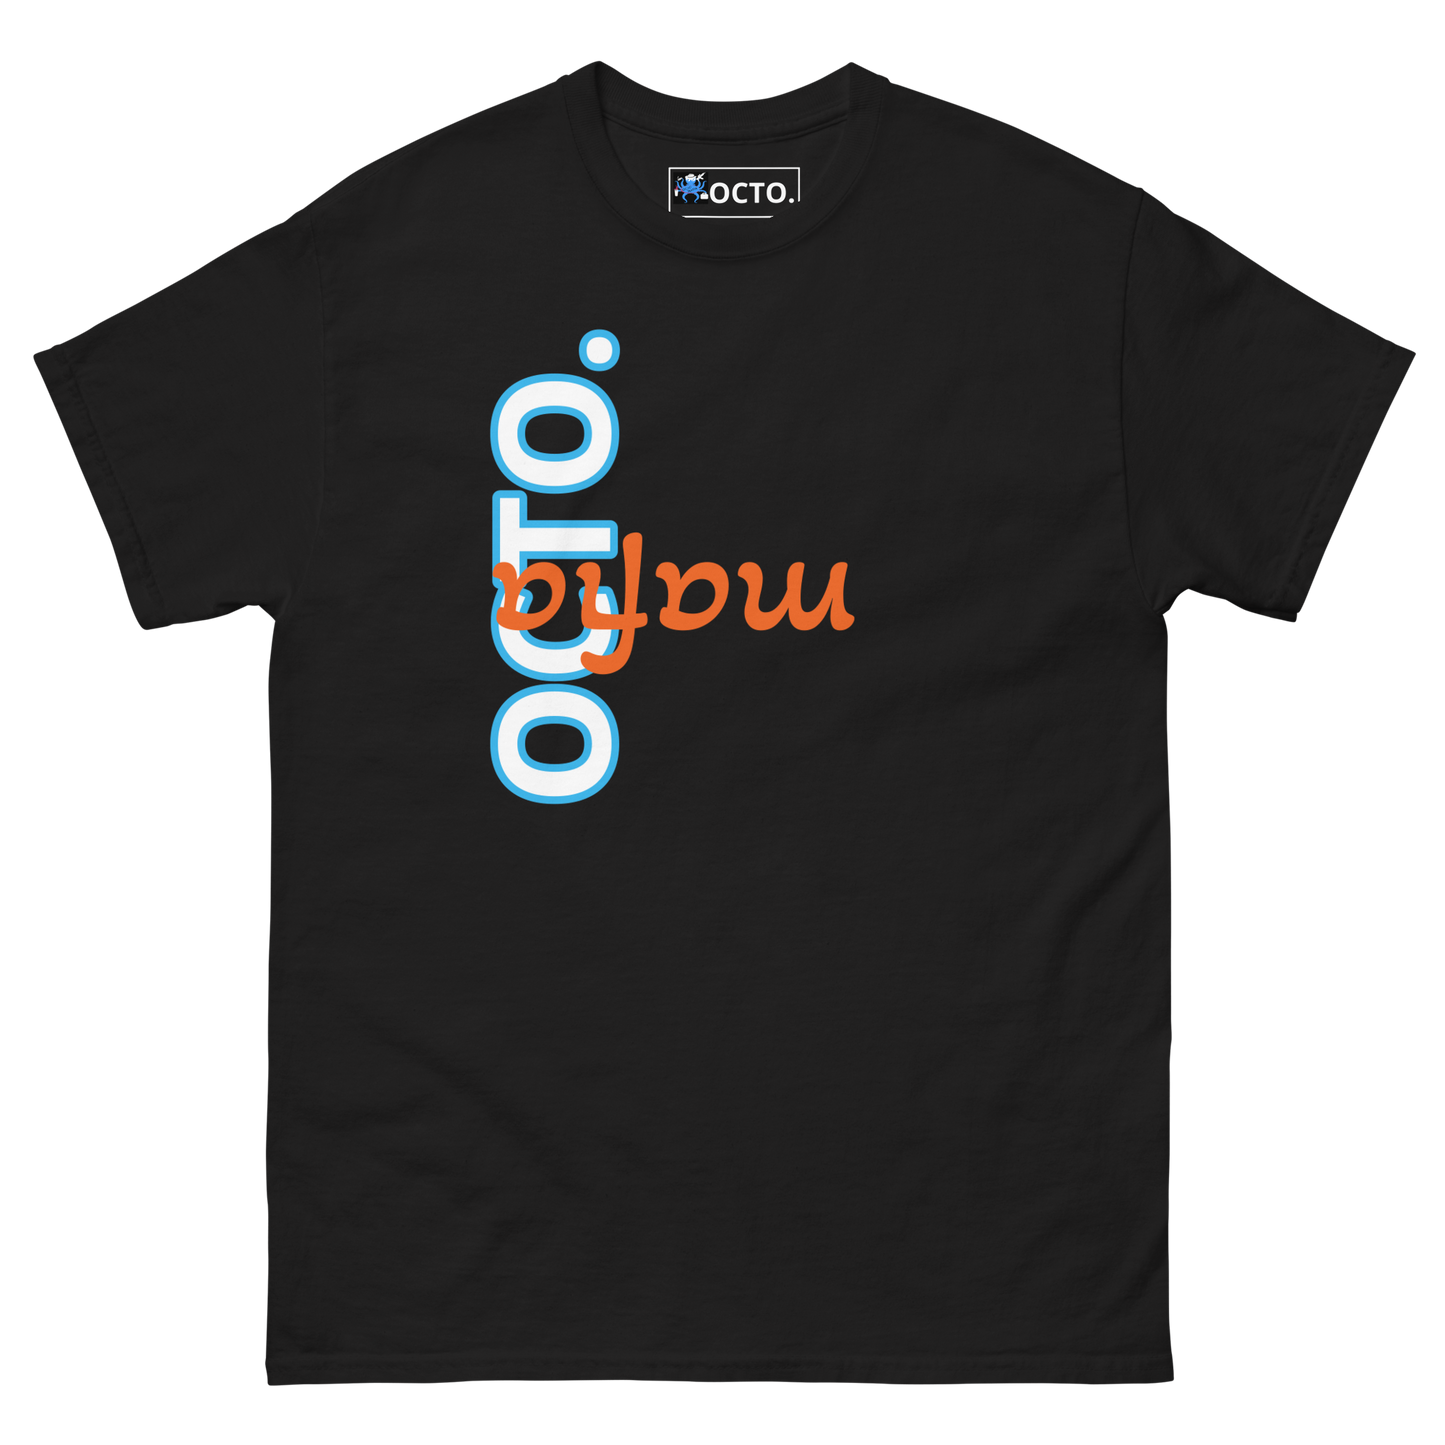 Octo. Mafia "rebel" T-shirt